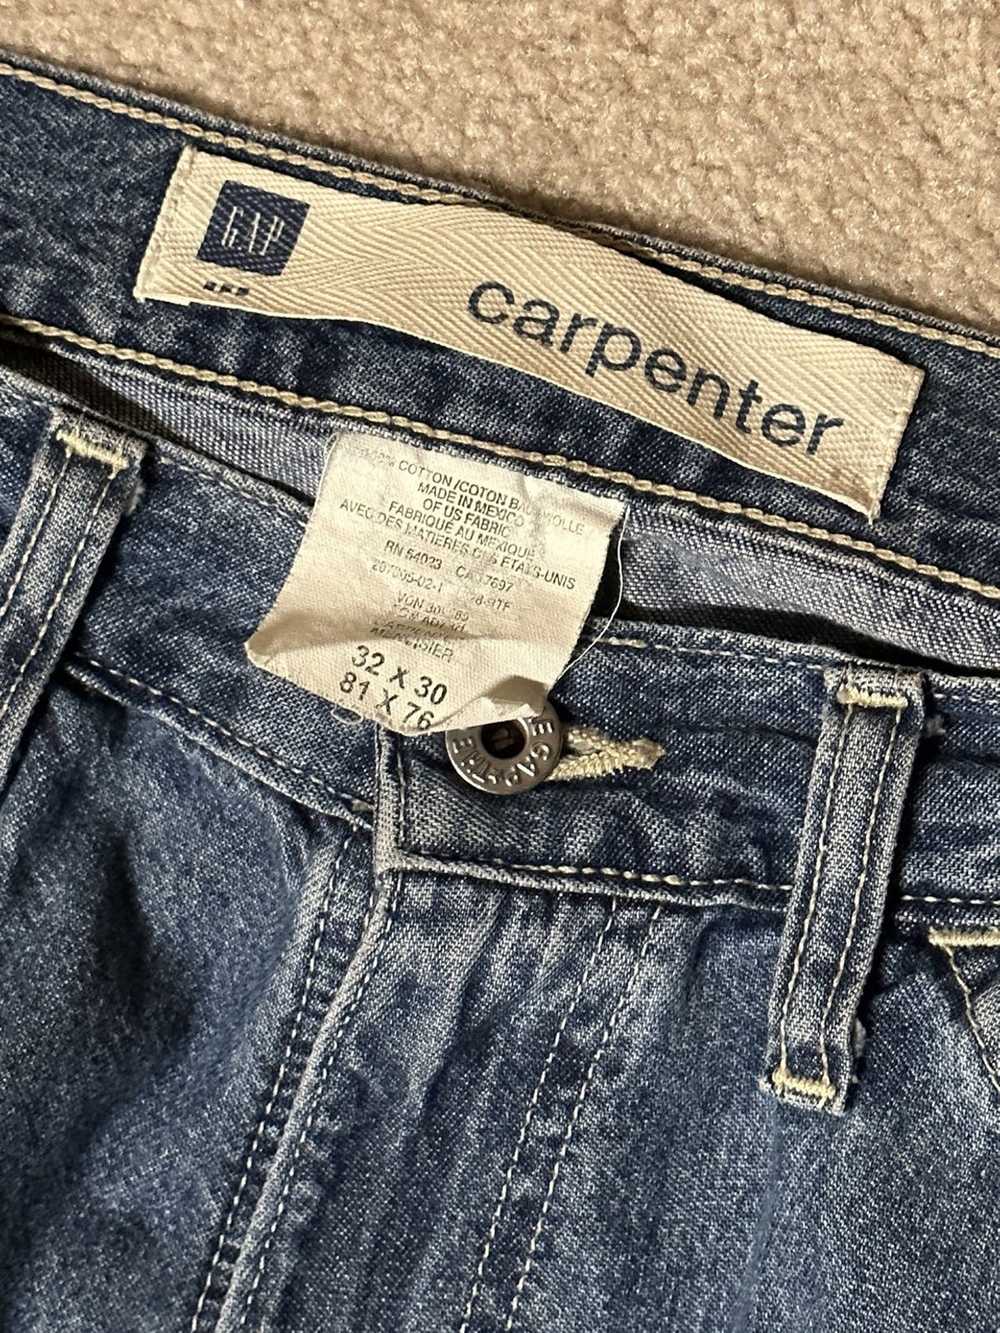 Gap GAP Carpenter Jeans - image 4